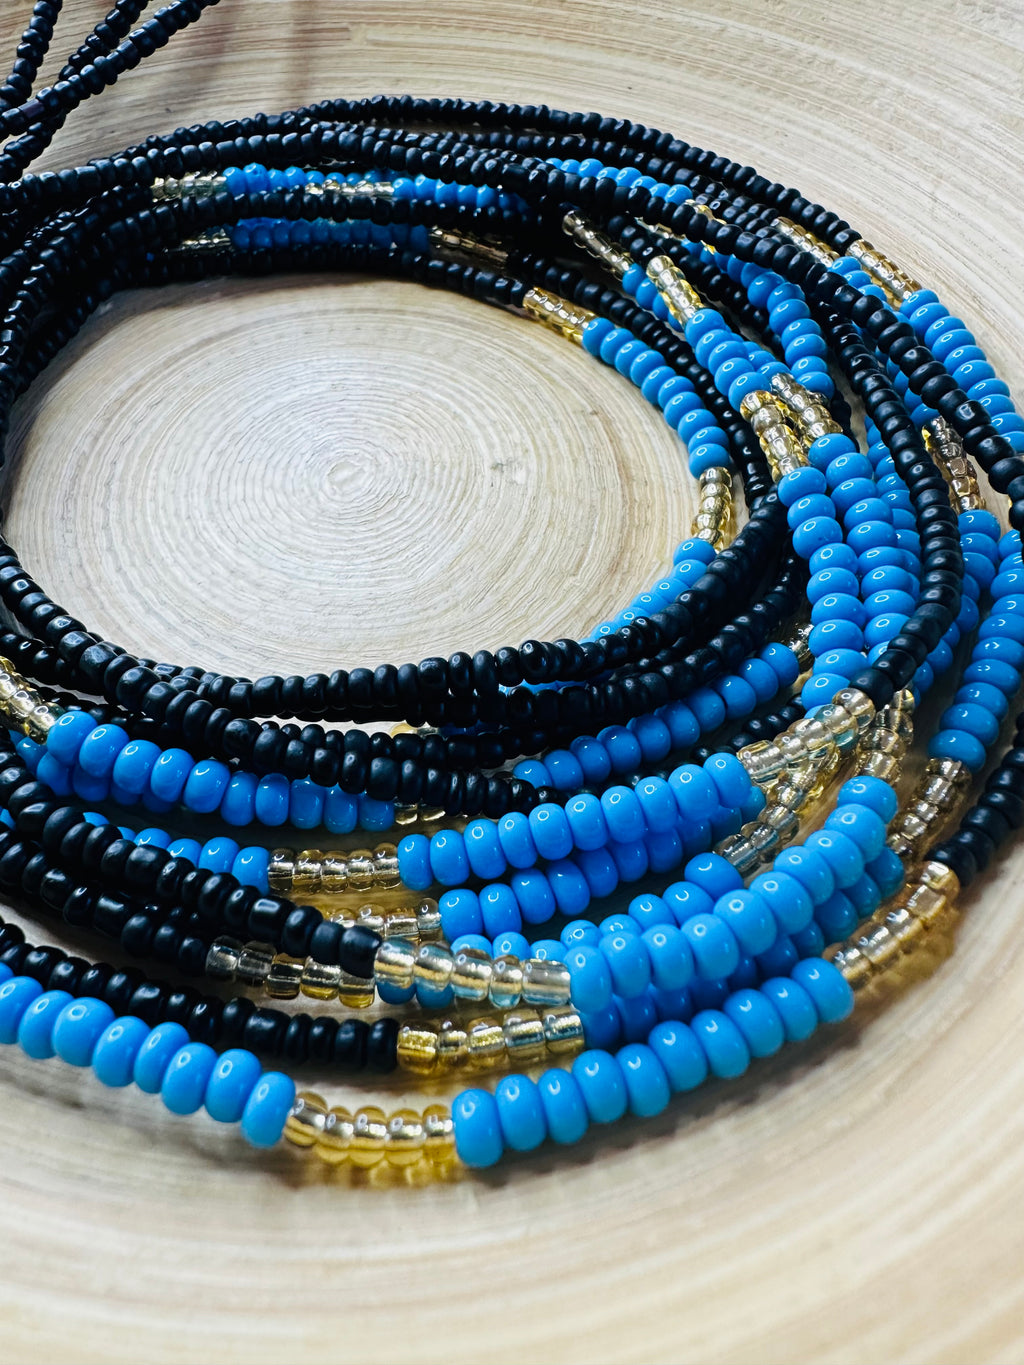 Black & Turquoise Journey Beads